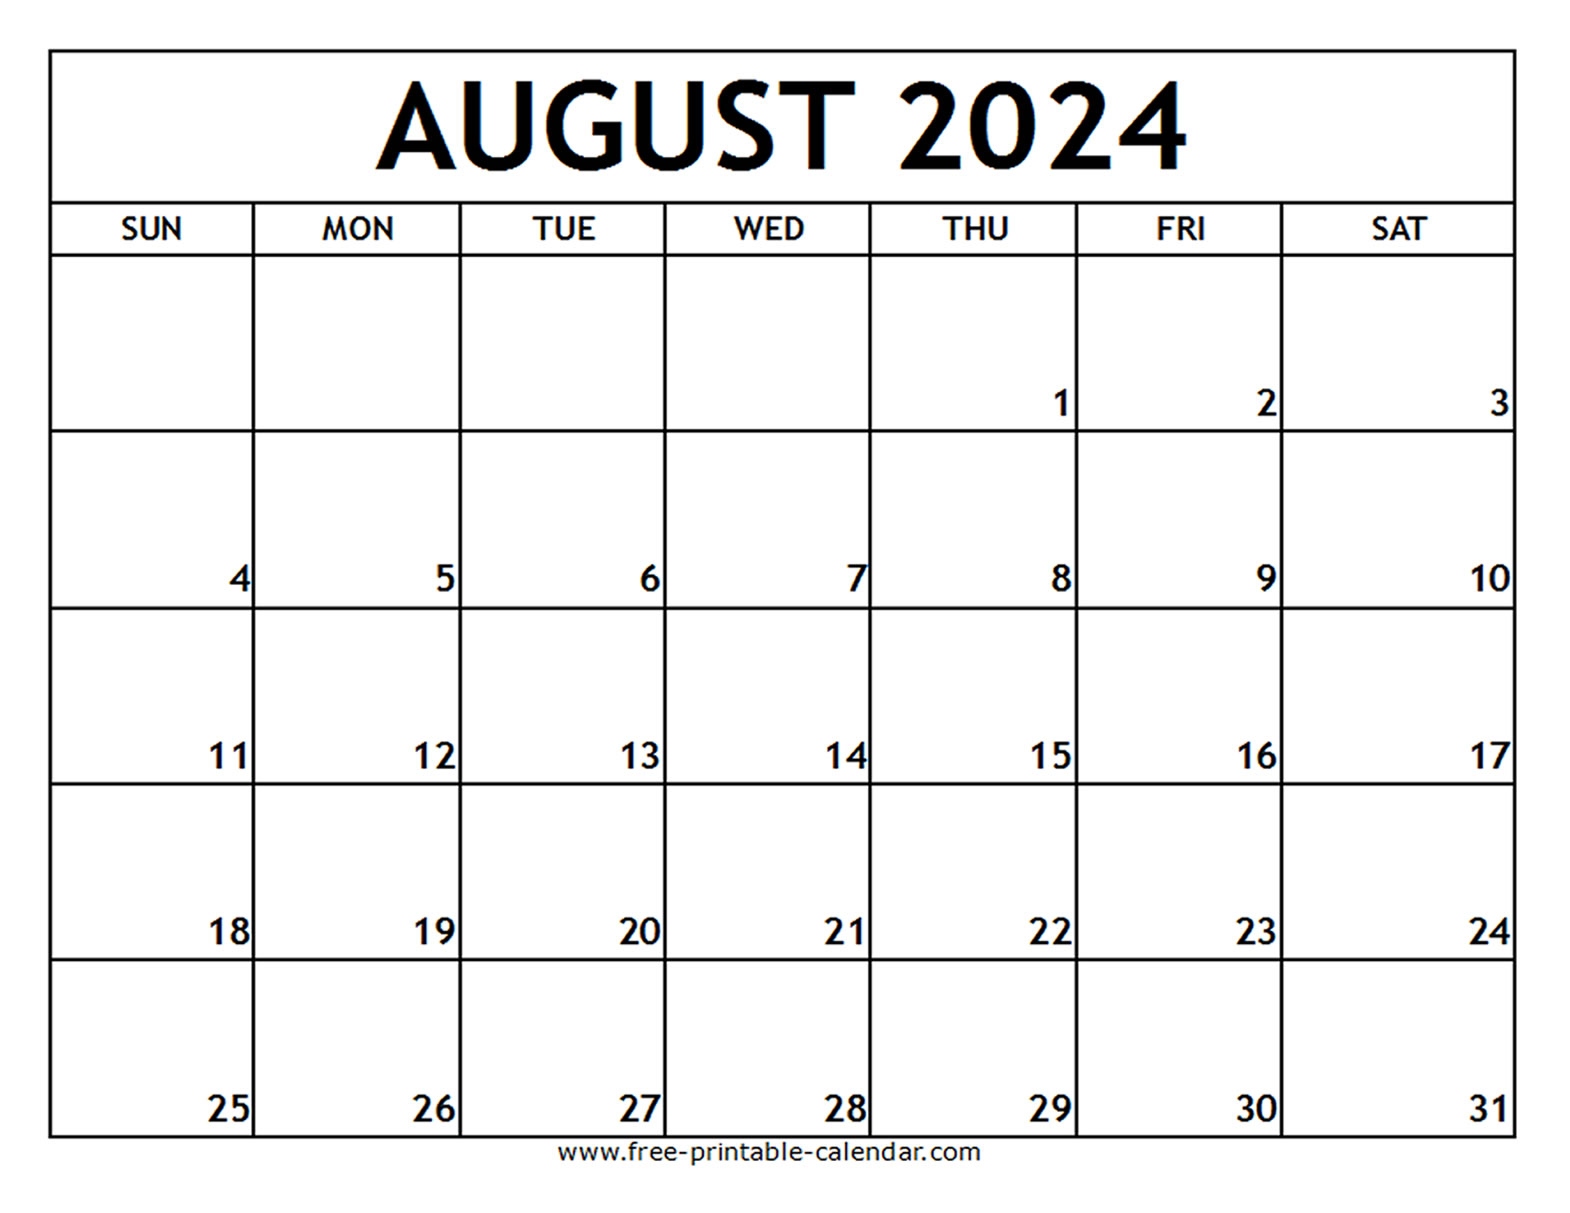 August 2024 Printable Calendar - Free-Printable-Calendar pertaining to Free Printable August 2024 Calendar With Holidays